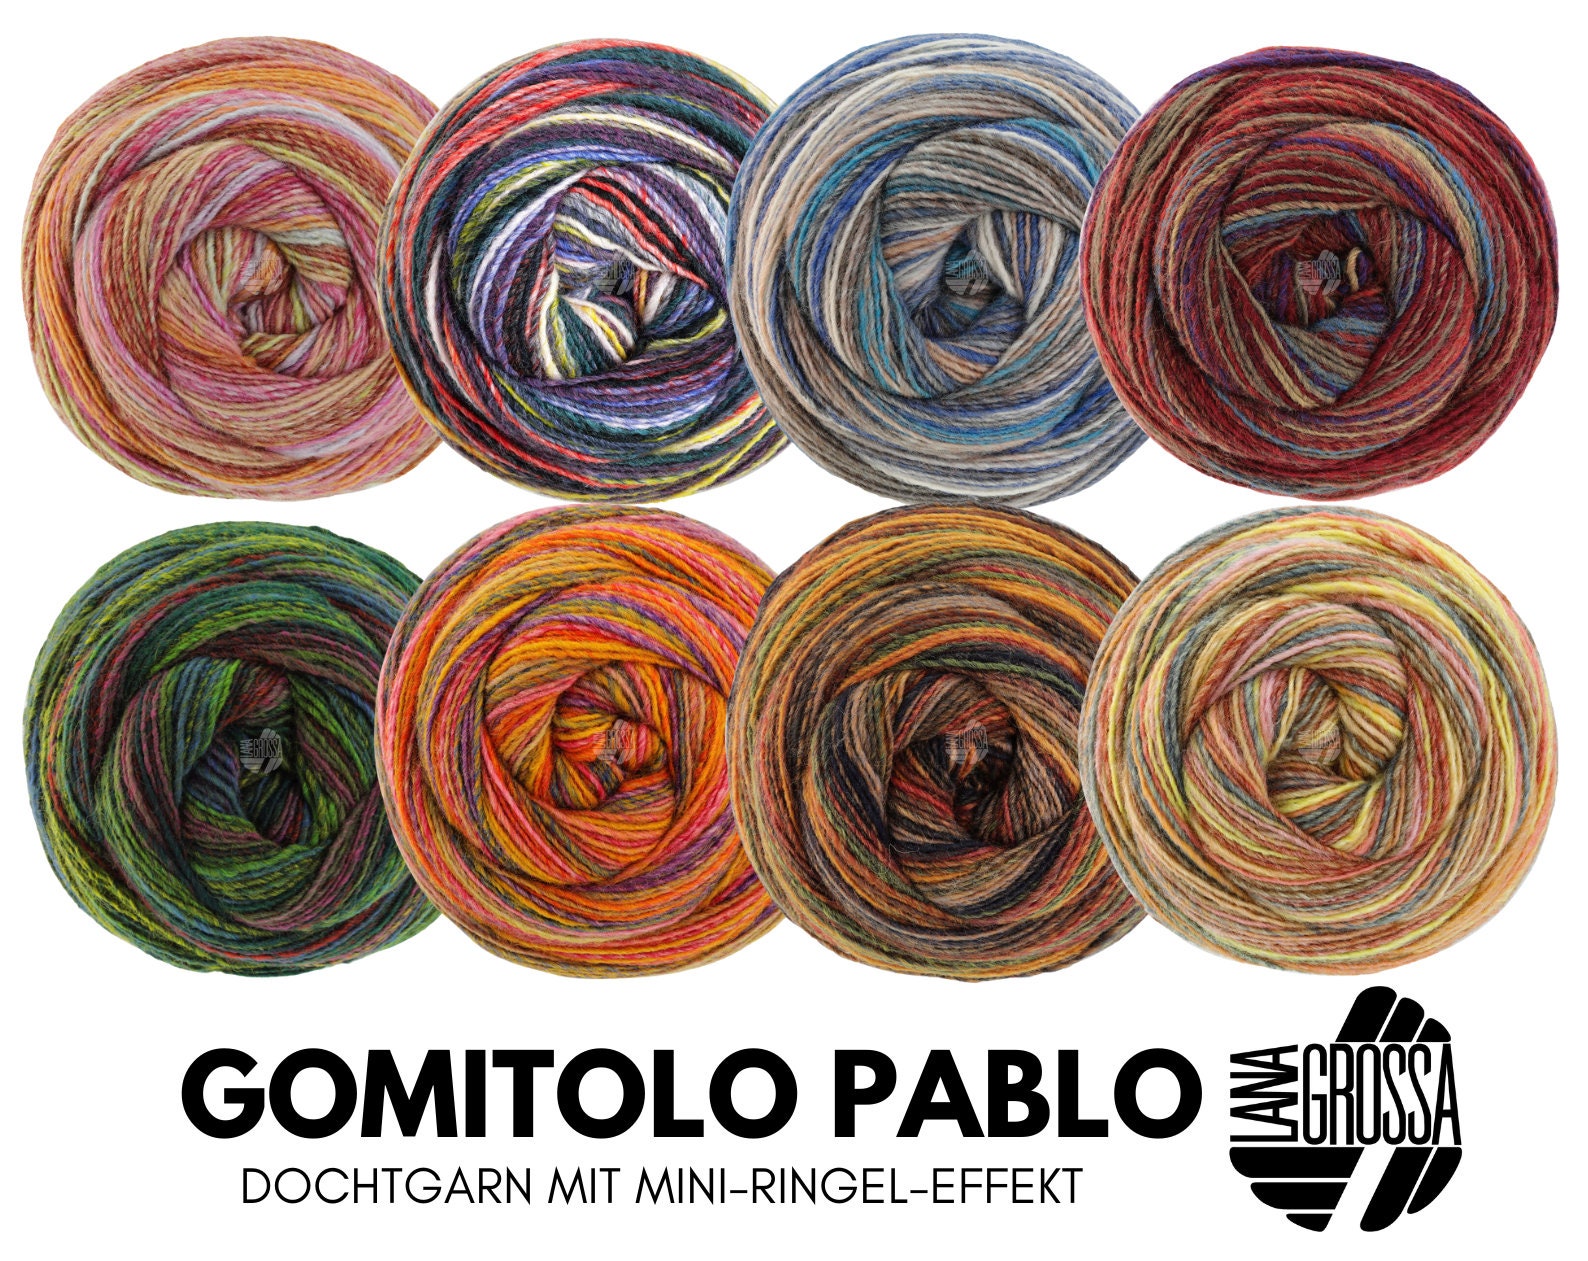 Lana Grossa GOMITOLO PABLO 200 G Wicking Yarn With Mini Striped Effect 700  M -  Sweden